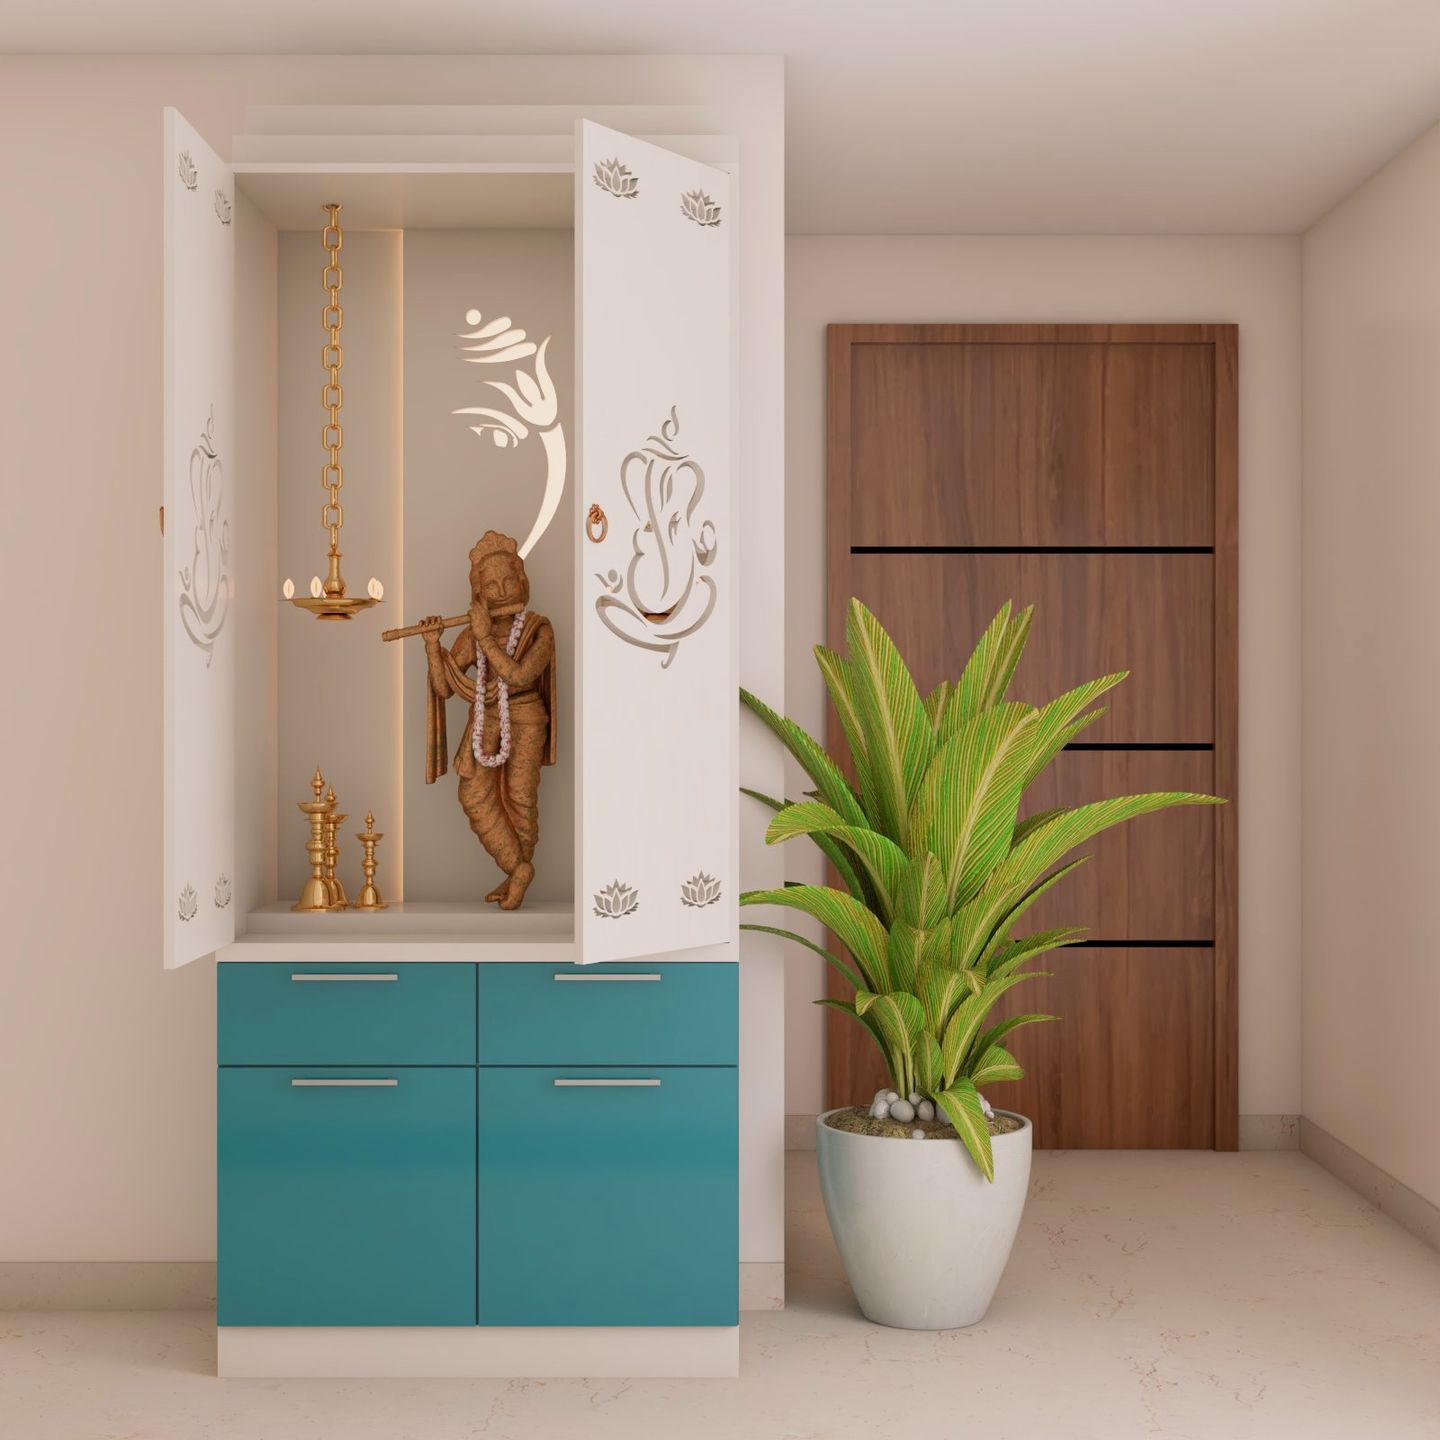 Contemporary Mandir Design With White Shutters And Blue Storage - Livspace